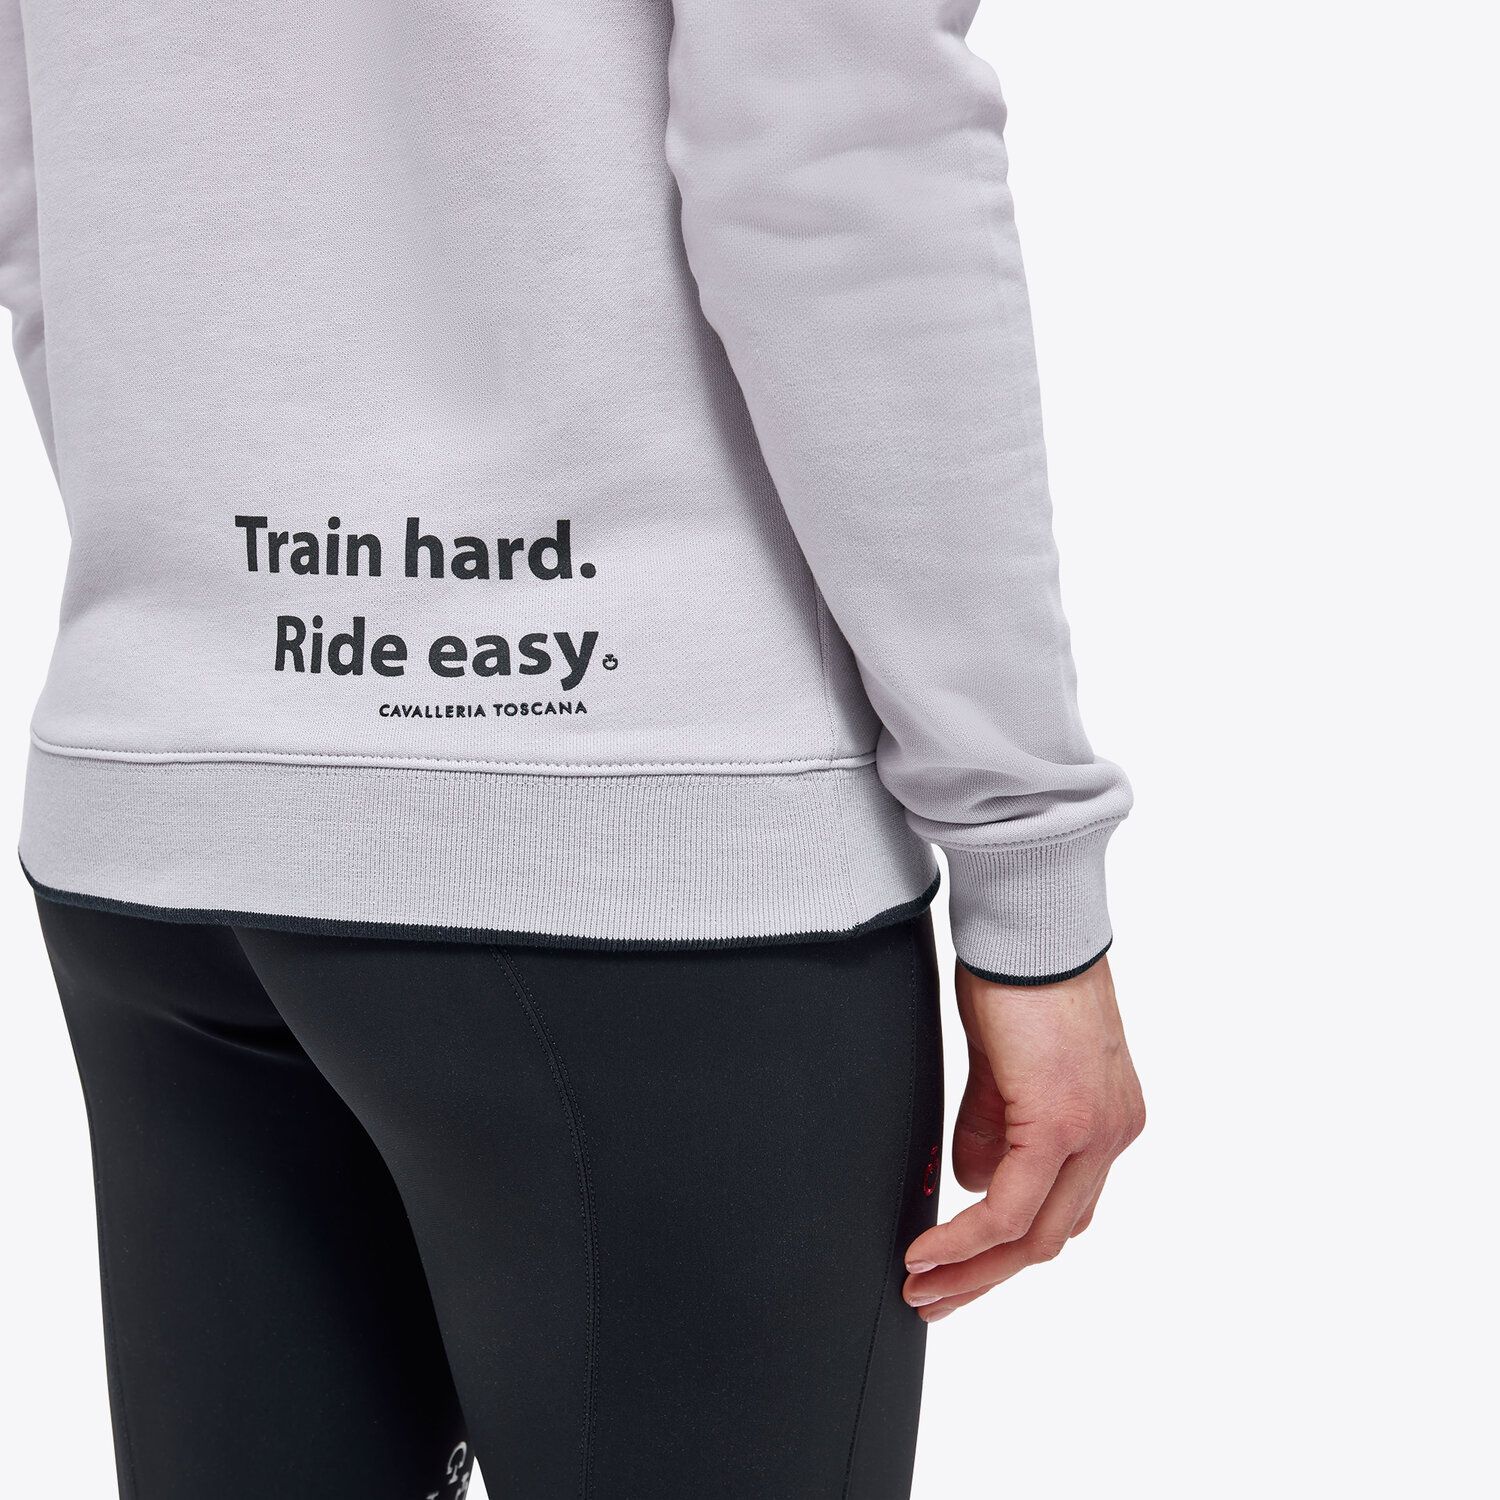 Cavalleria Toscana Women's Train Hard Ride Easy Sweatshirt LIGHT GREY-4